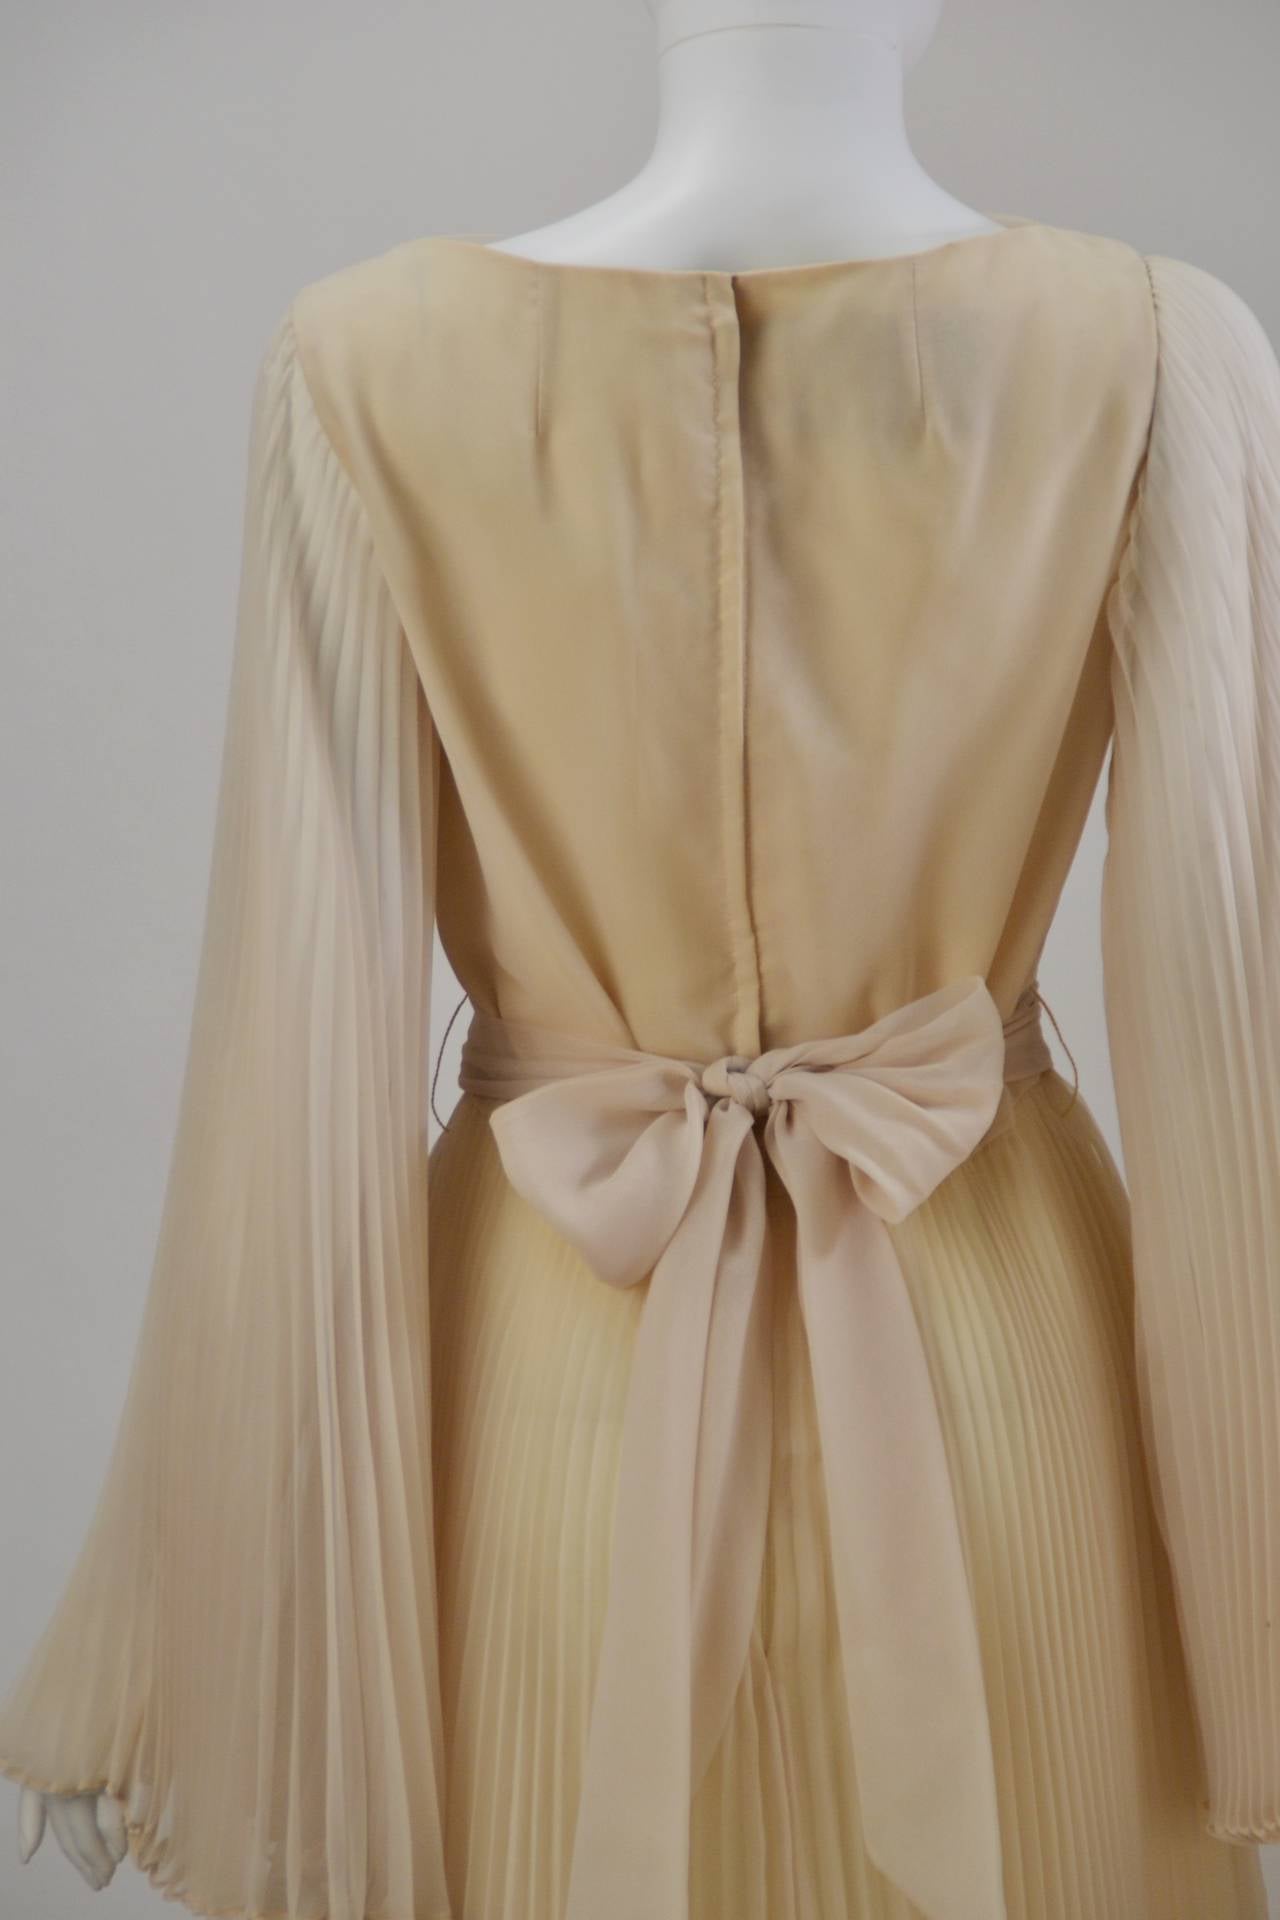 Women's 1970s Mollie Parnis Sheer Pleated Dress